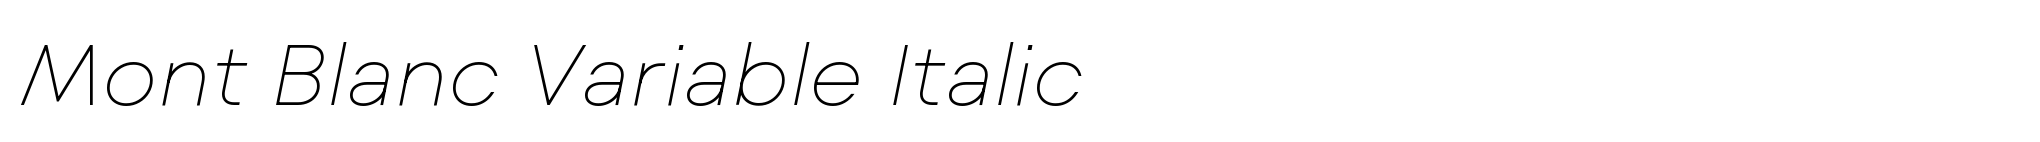 Mont Blanc Variable Italic image